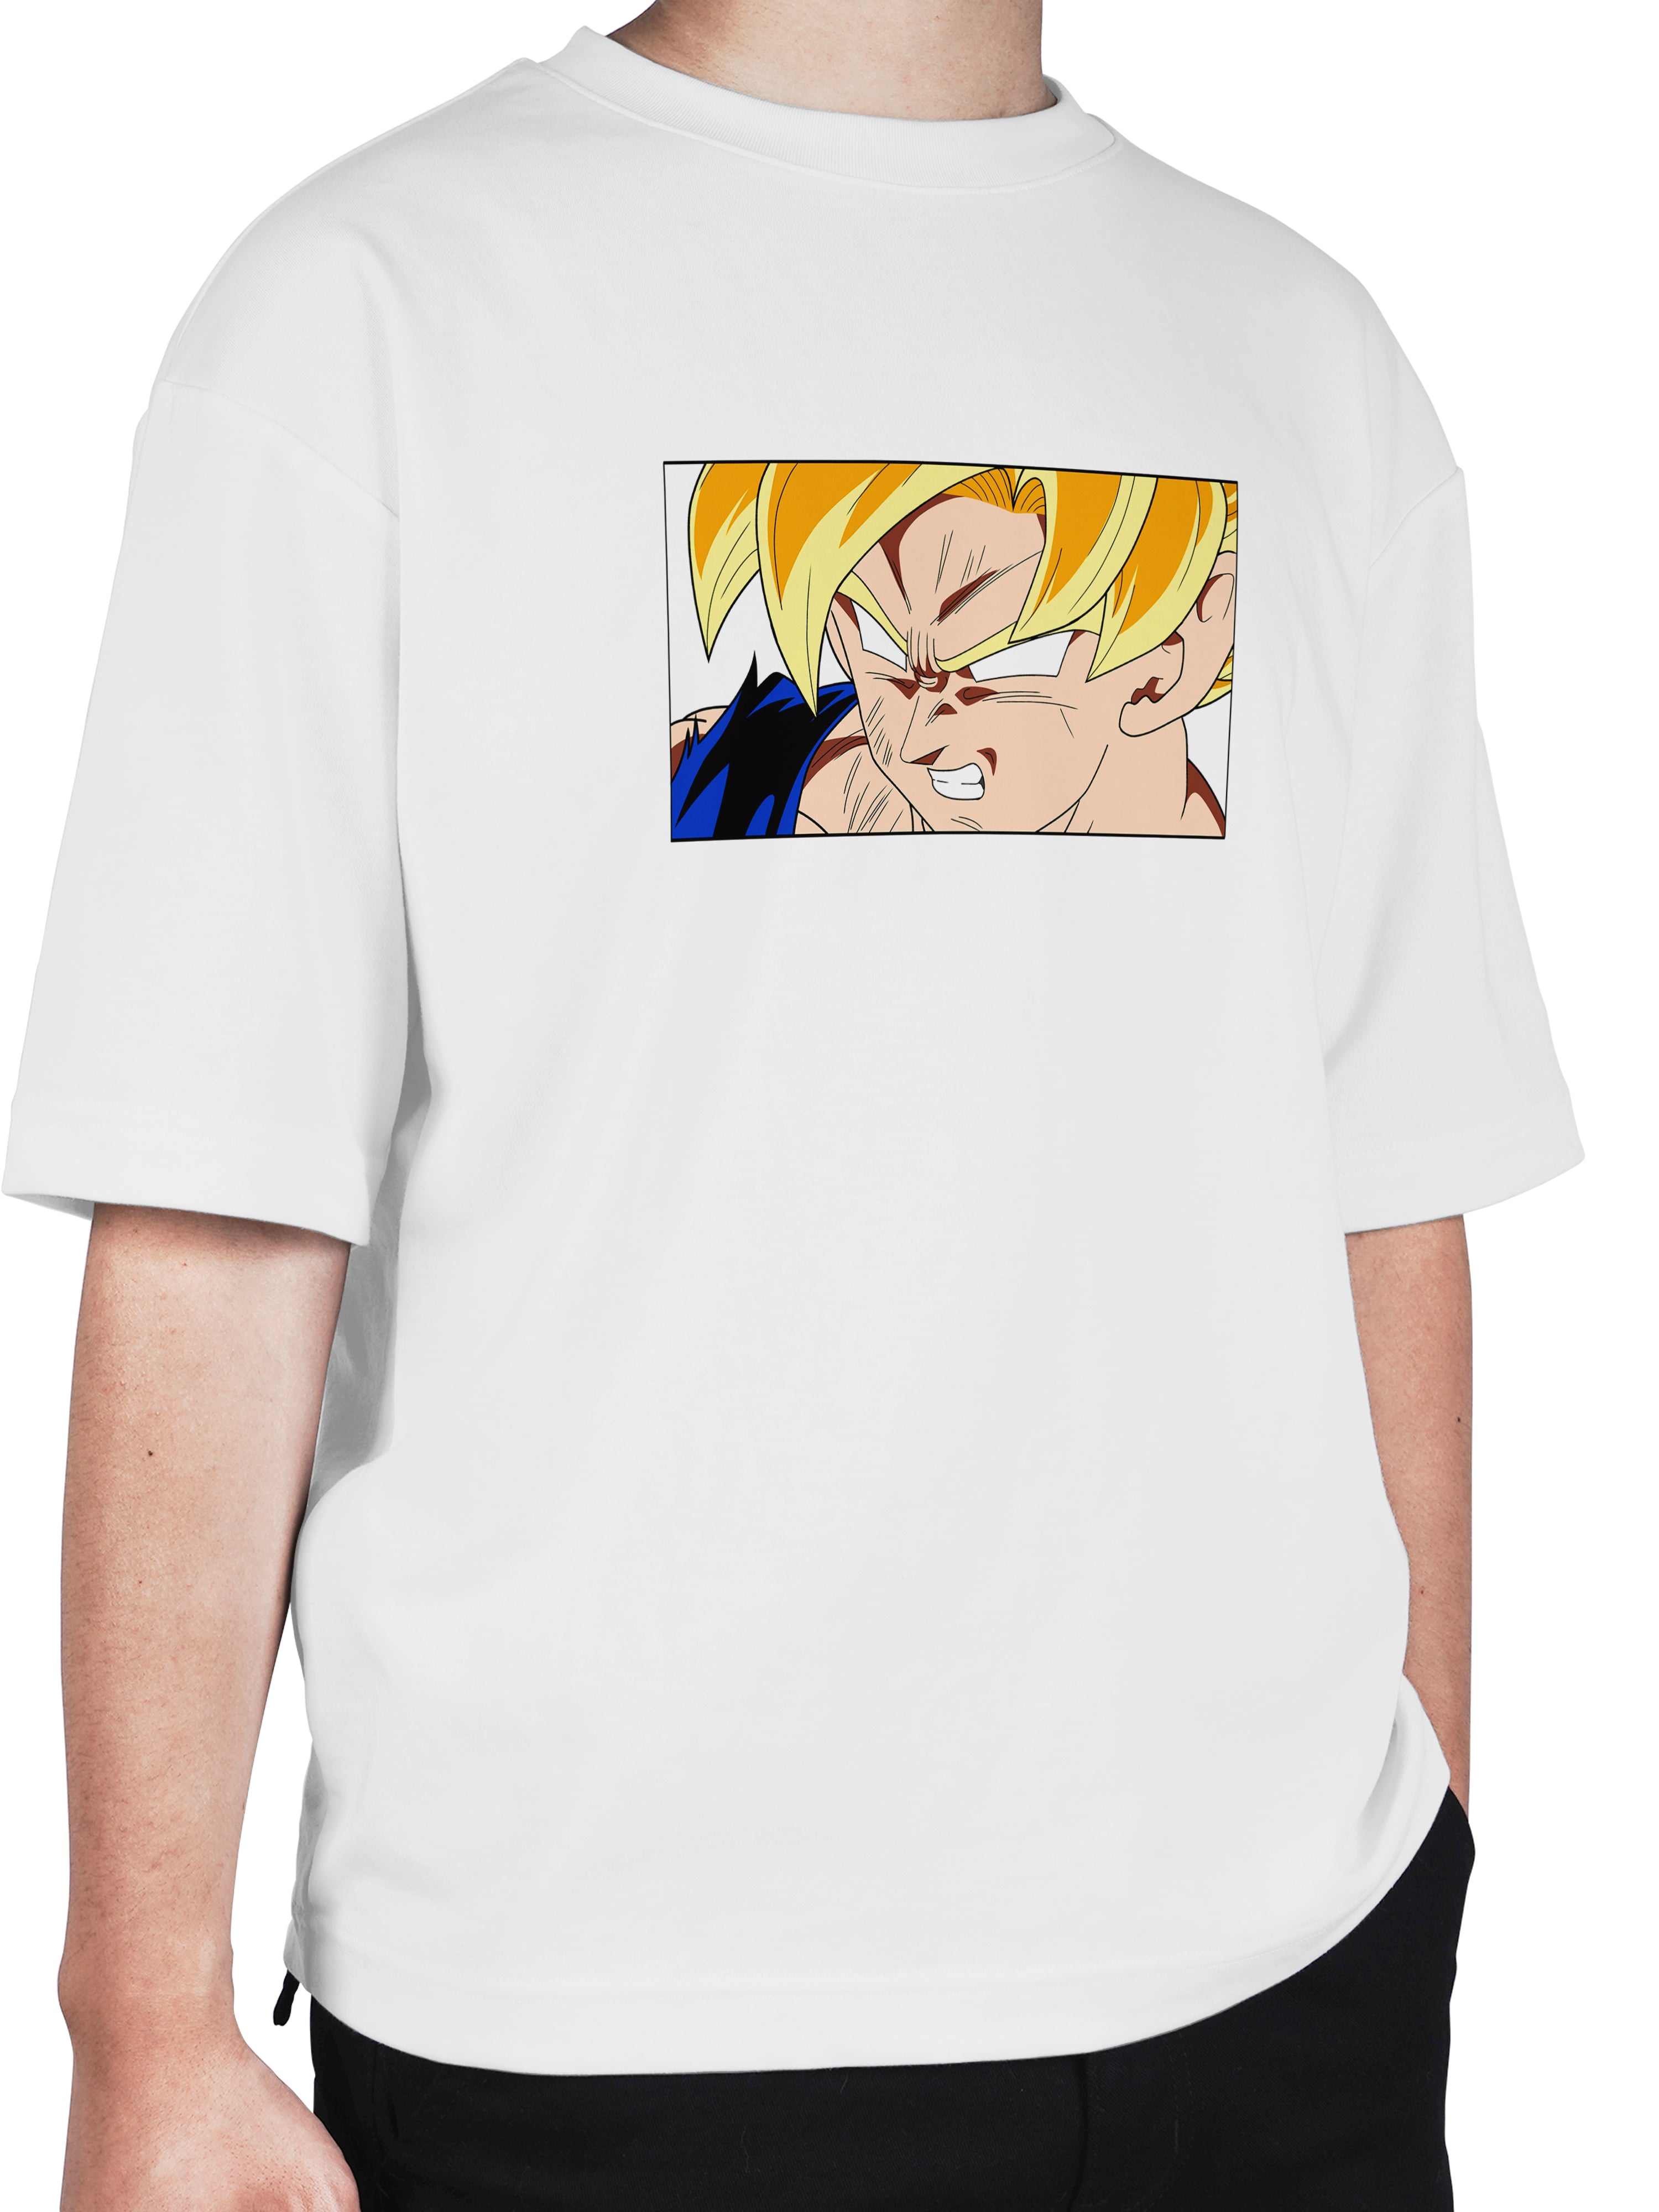 Goku Super Saiyan DBZ Half Sleeve T-shirt